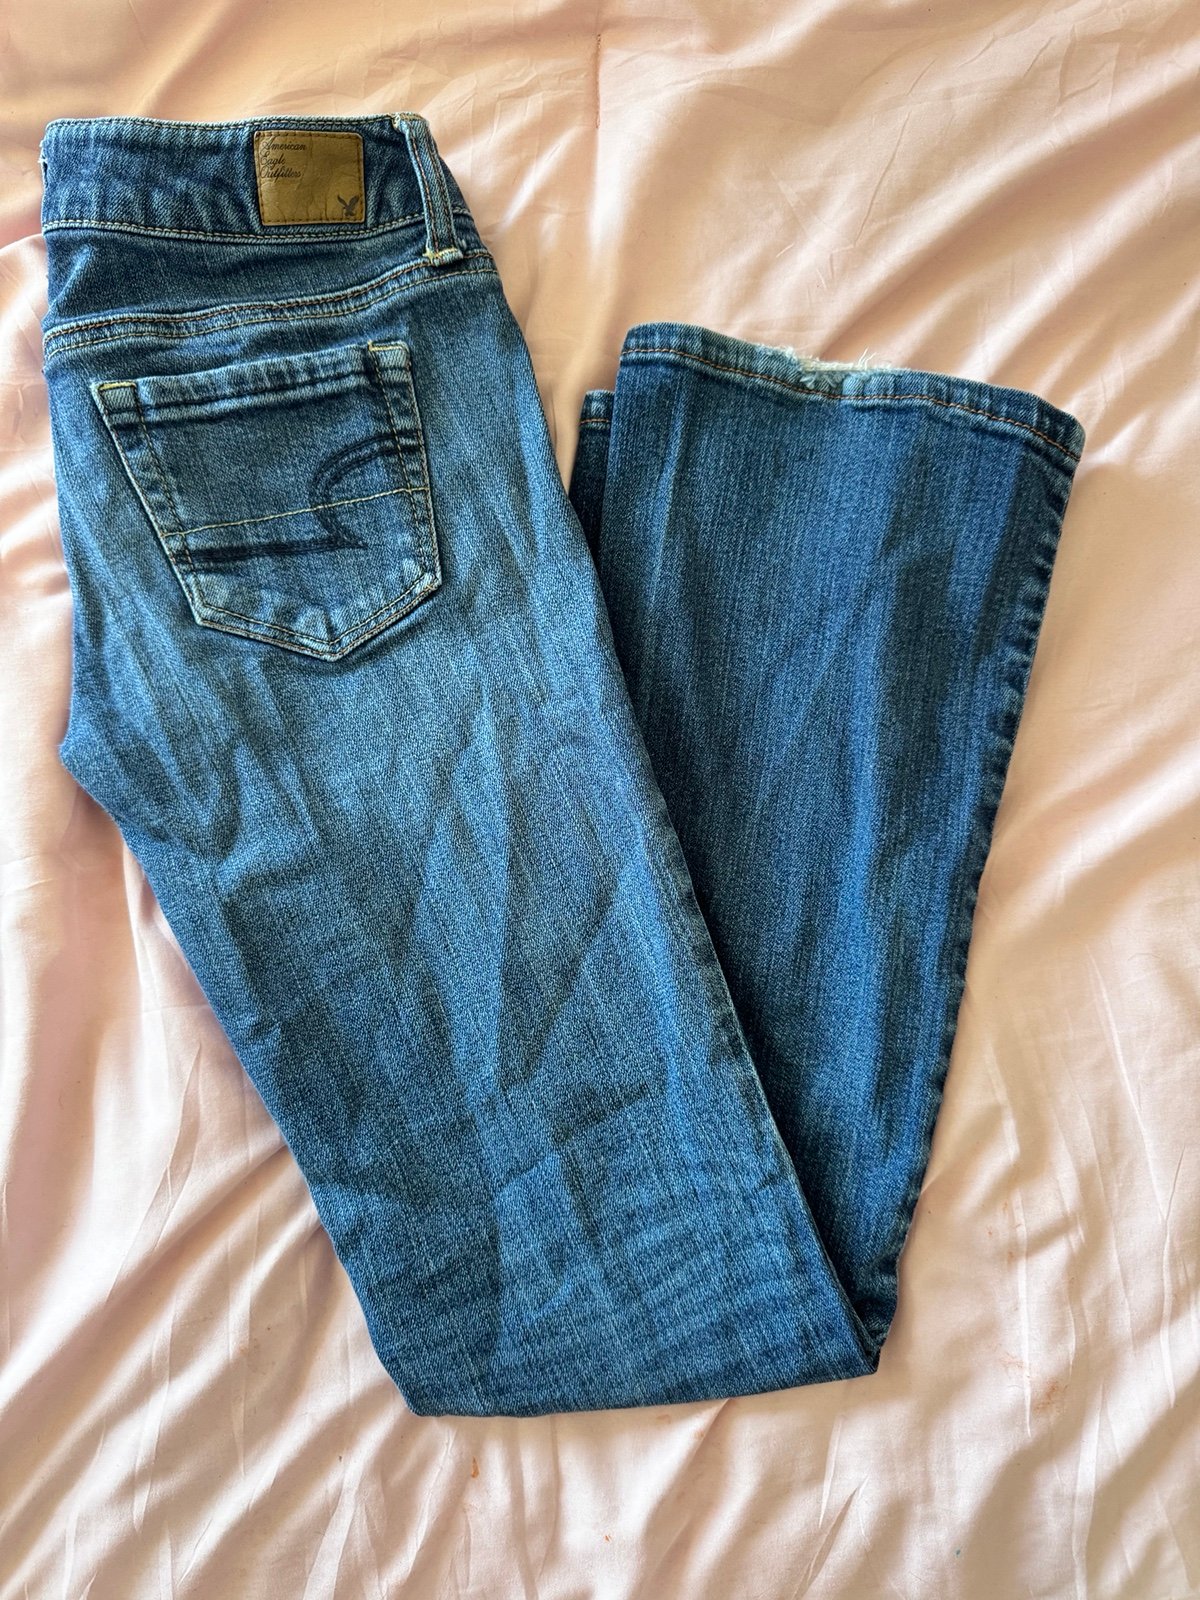 Elegant American Eagle jeans size 4 Kn4LvUH9b US Sale